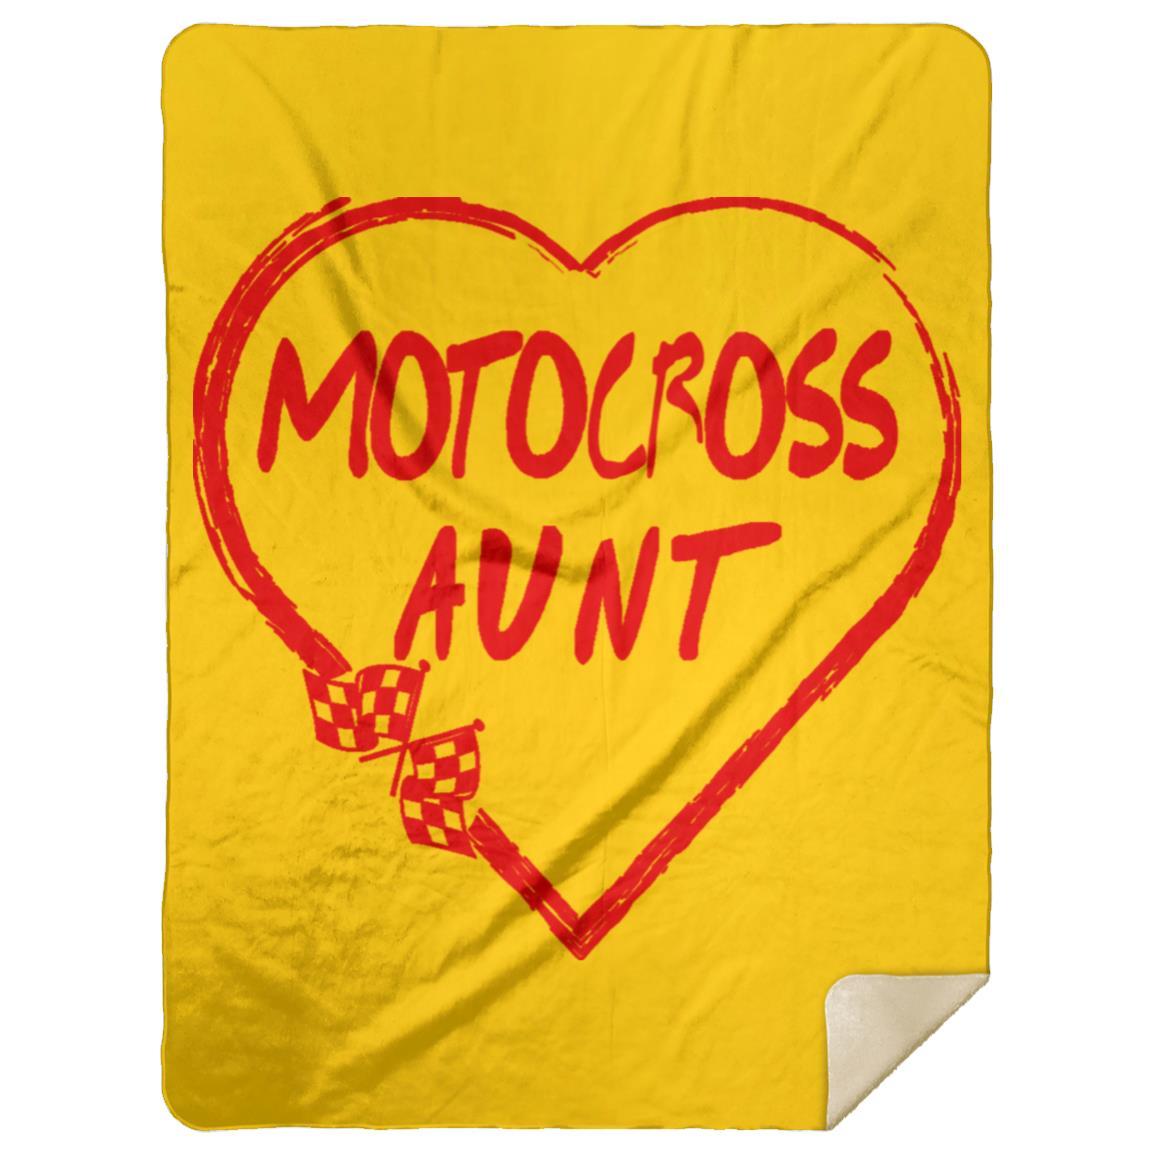 Motocross Aunt Heart Premium Mink Sherpa Blanket 60x80